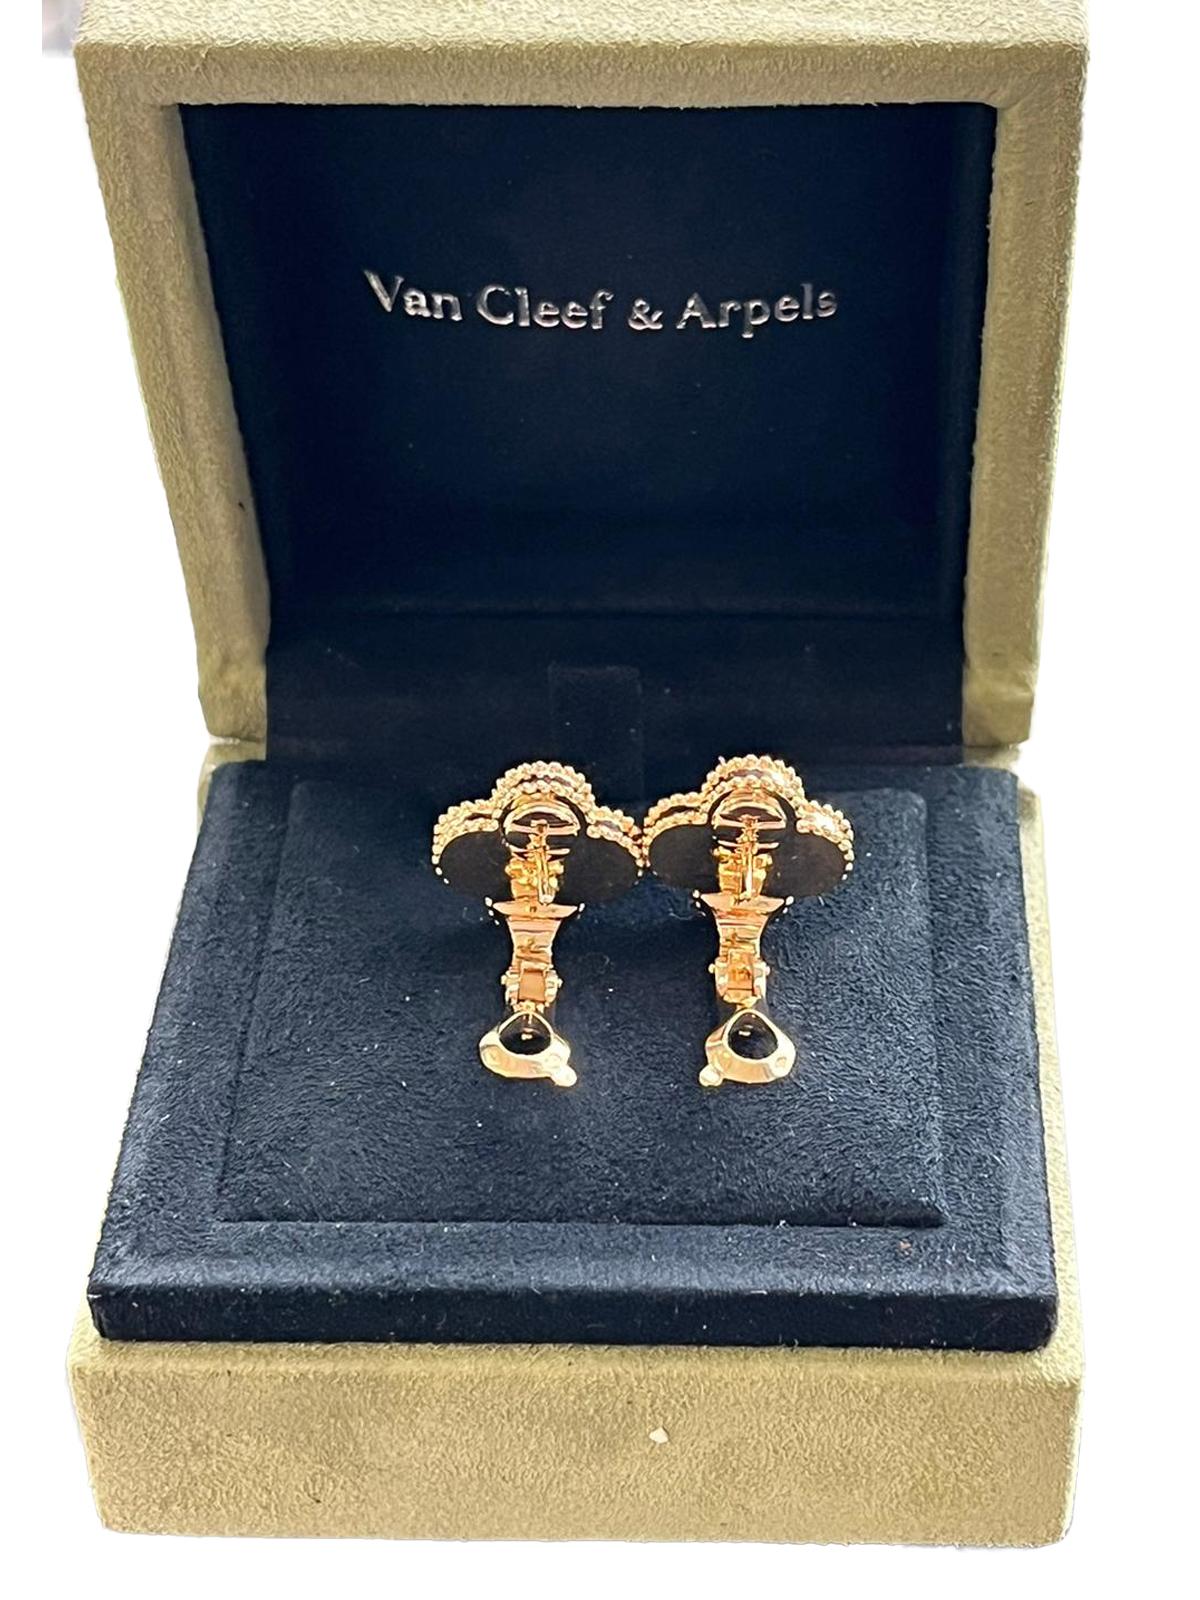 Van Cleef & Arpels Vintage Alhambra Guilloché Earrings 18K Yellow Gold 6